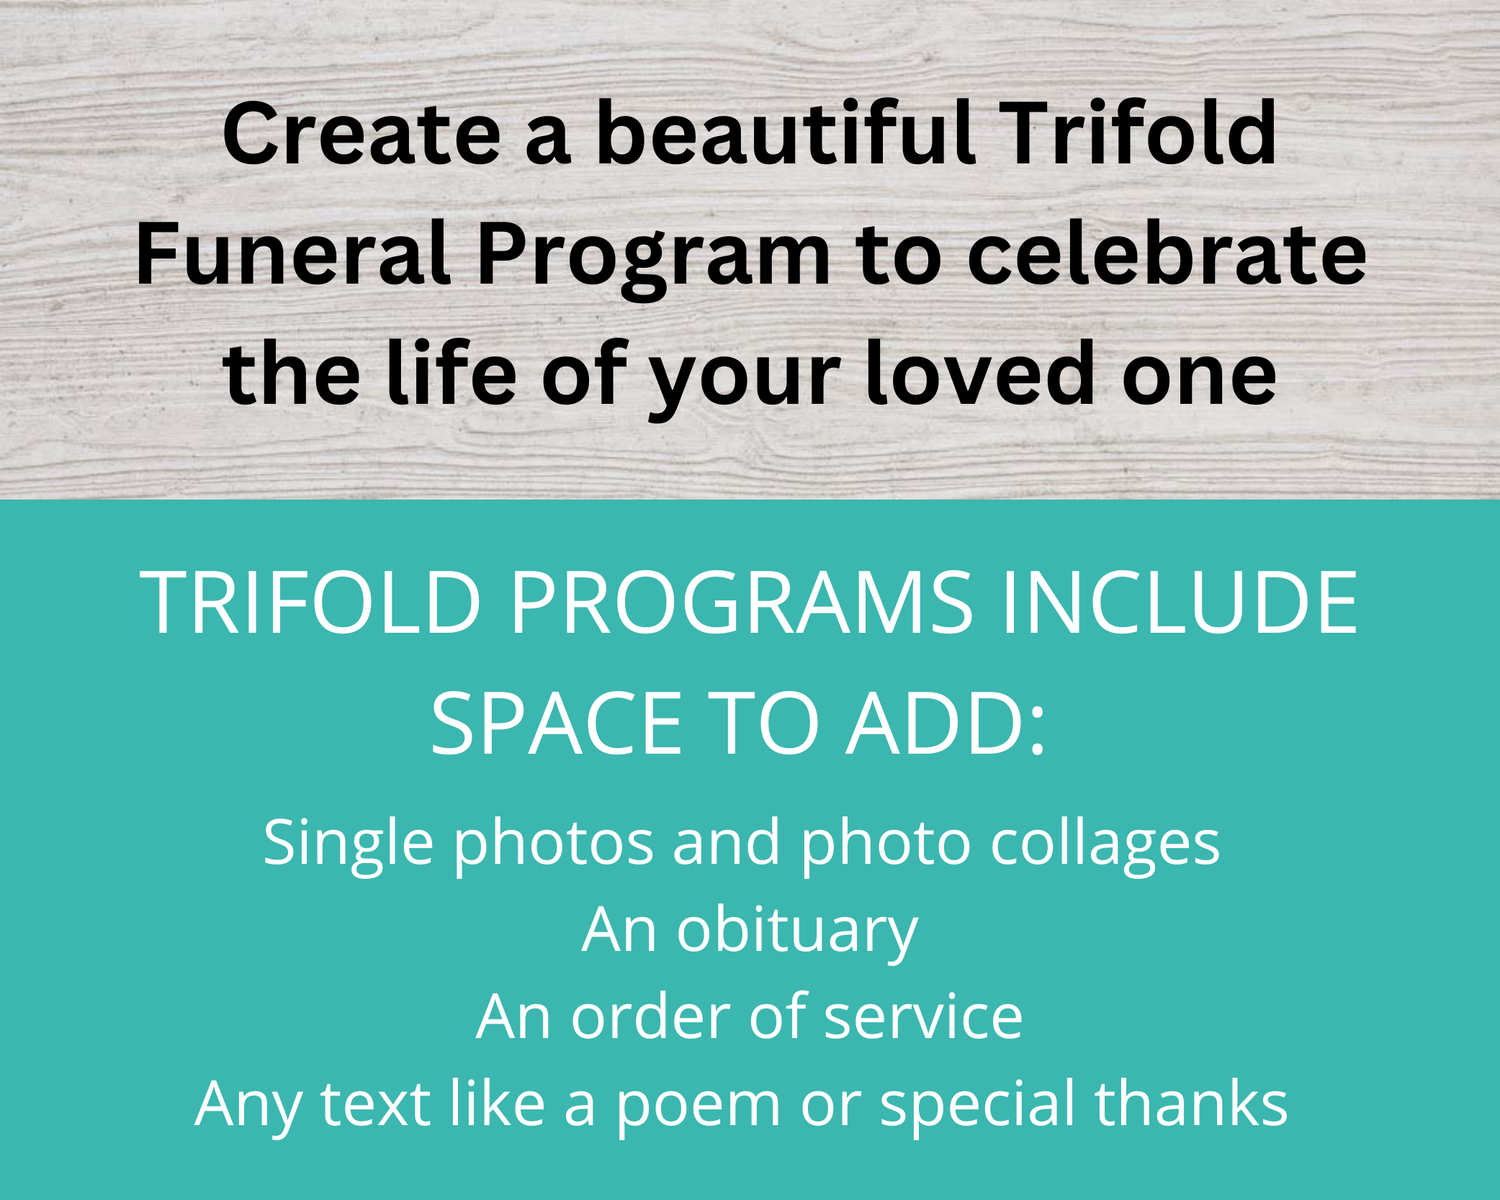 Trifold Golden Funeral Program Template